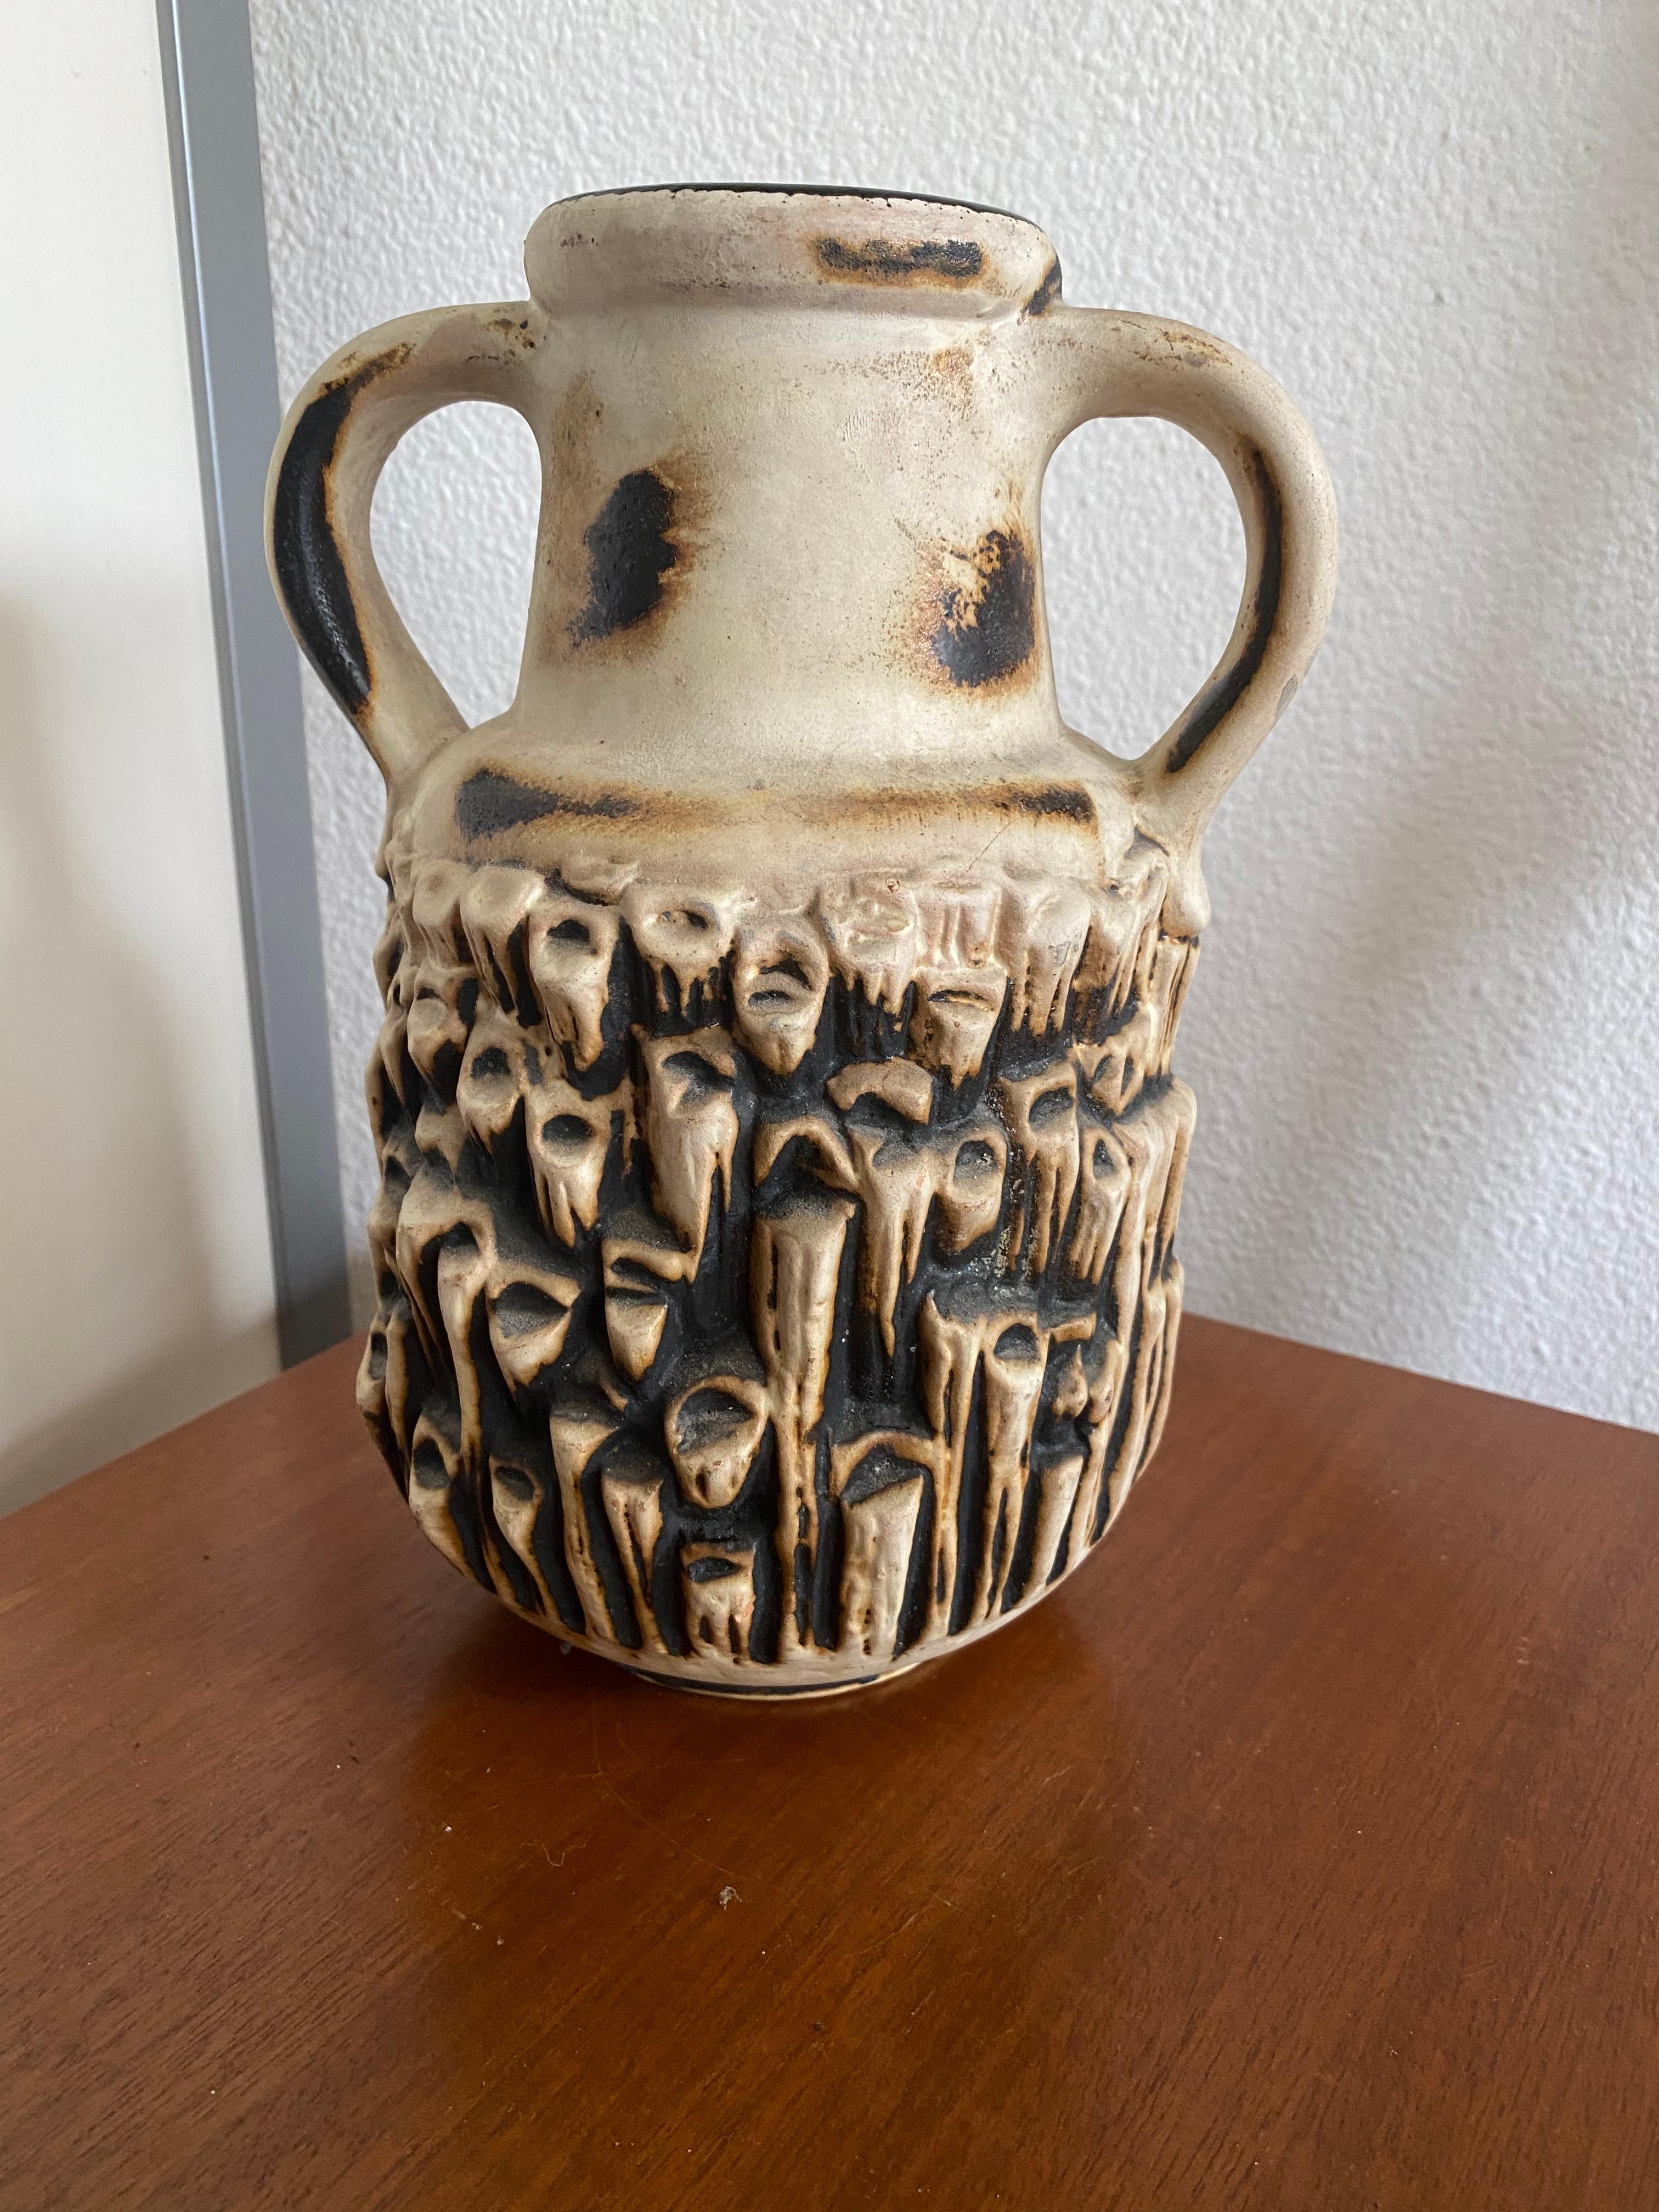 A beautiful, so called Coral vase by Carstens Tonnieshof Keramik.